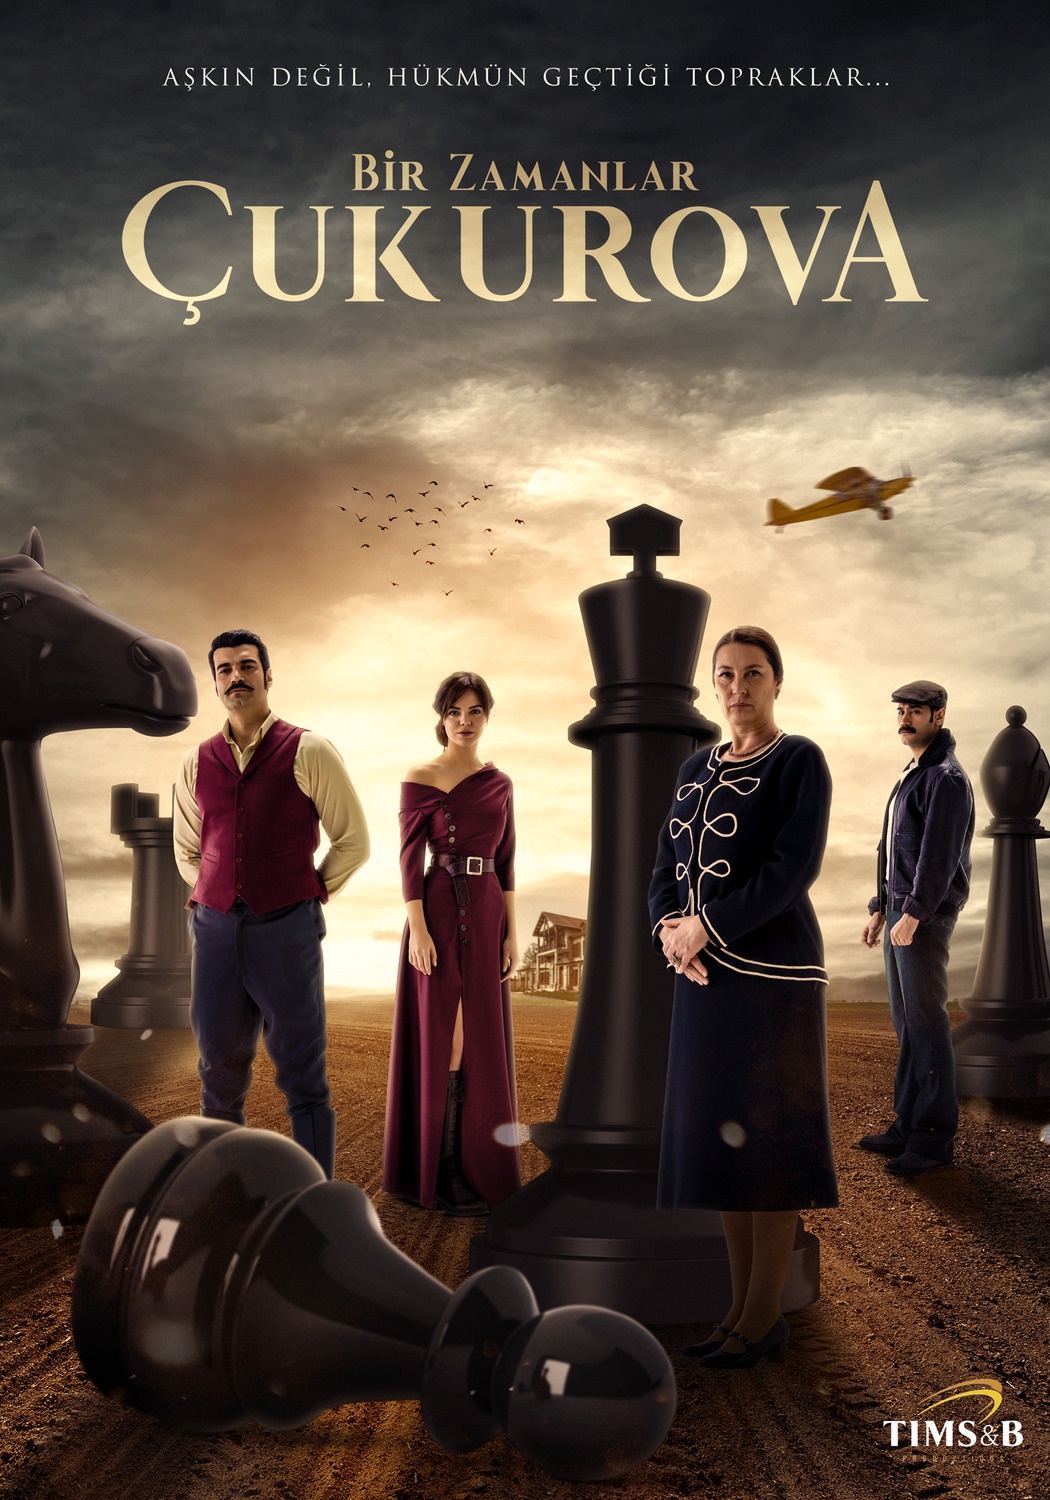 Extra Large TV Poster Image for Bir zamanlar Çukurova (#4 of 12)